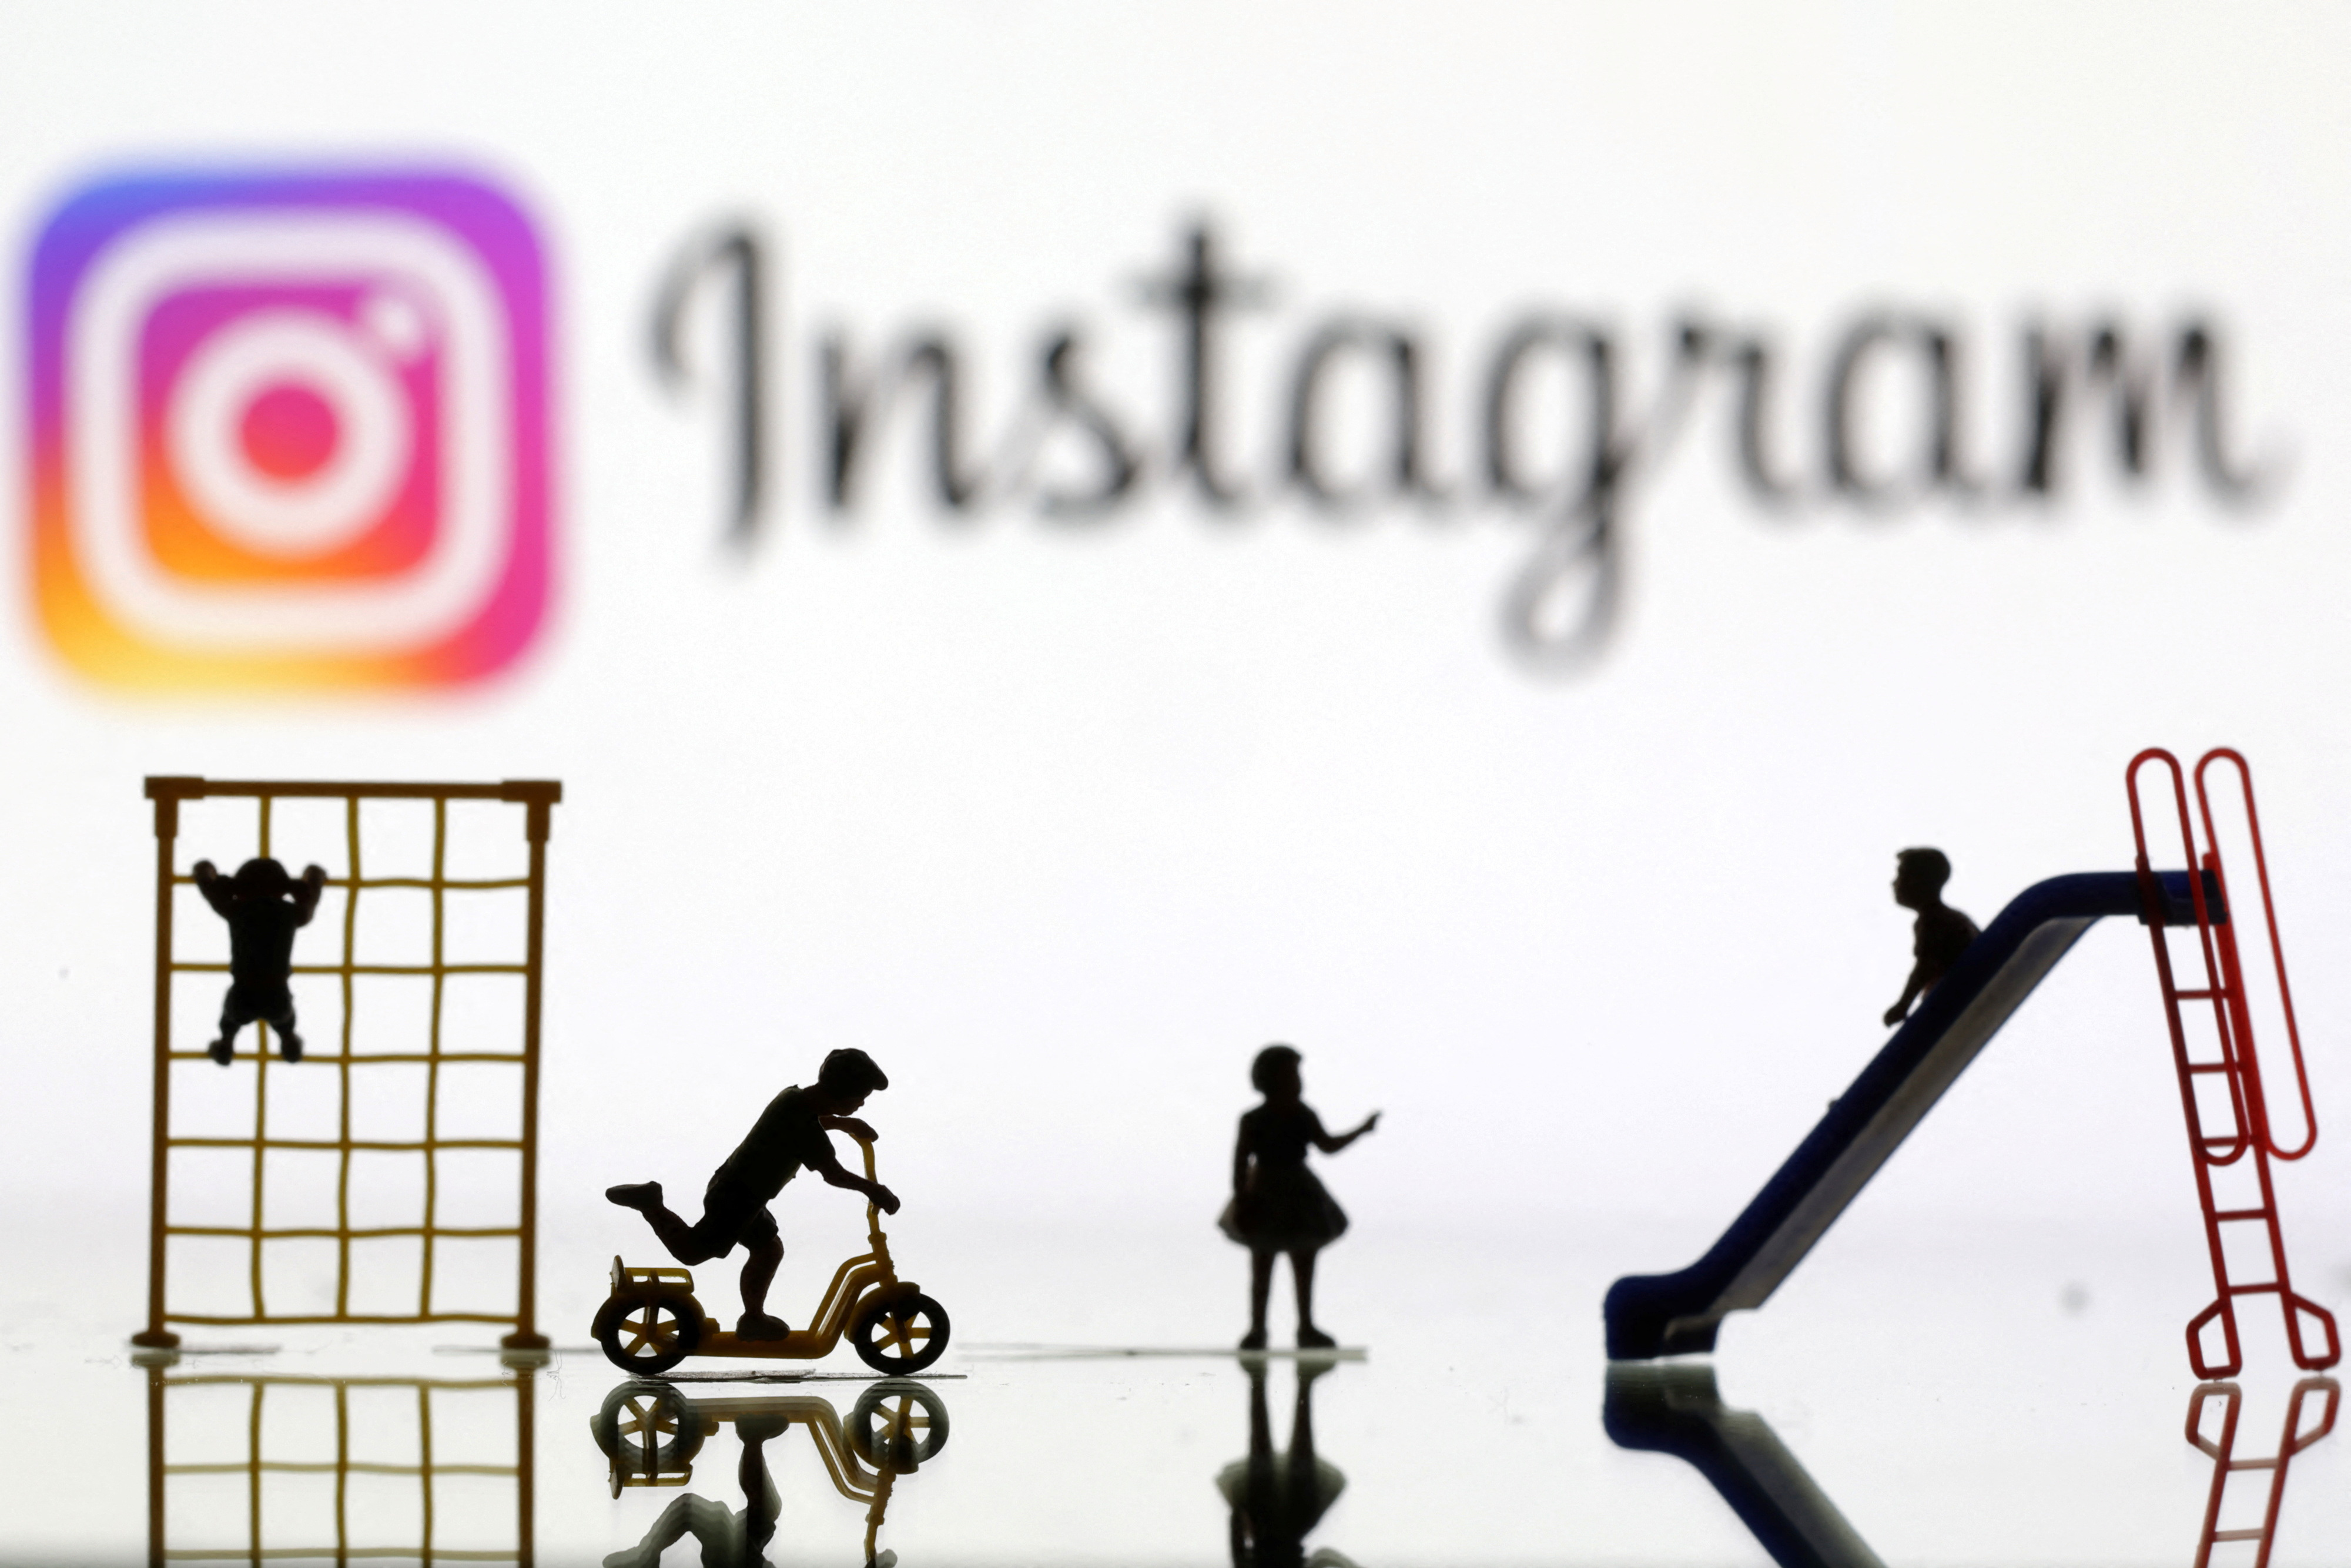 Illustration shows Instagram logo